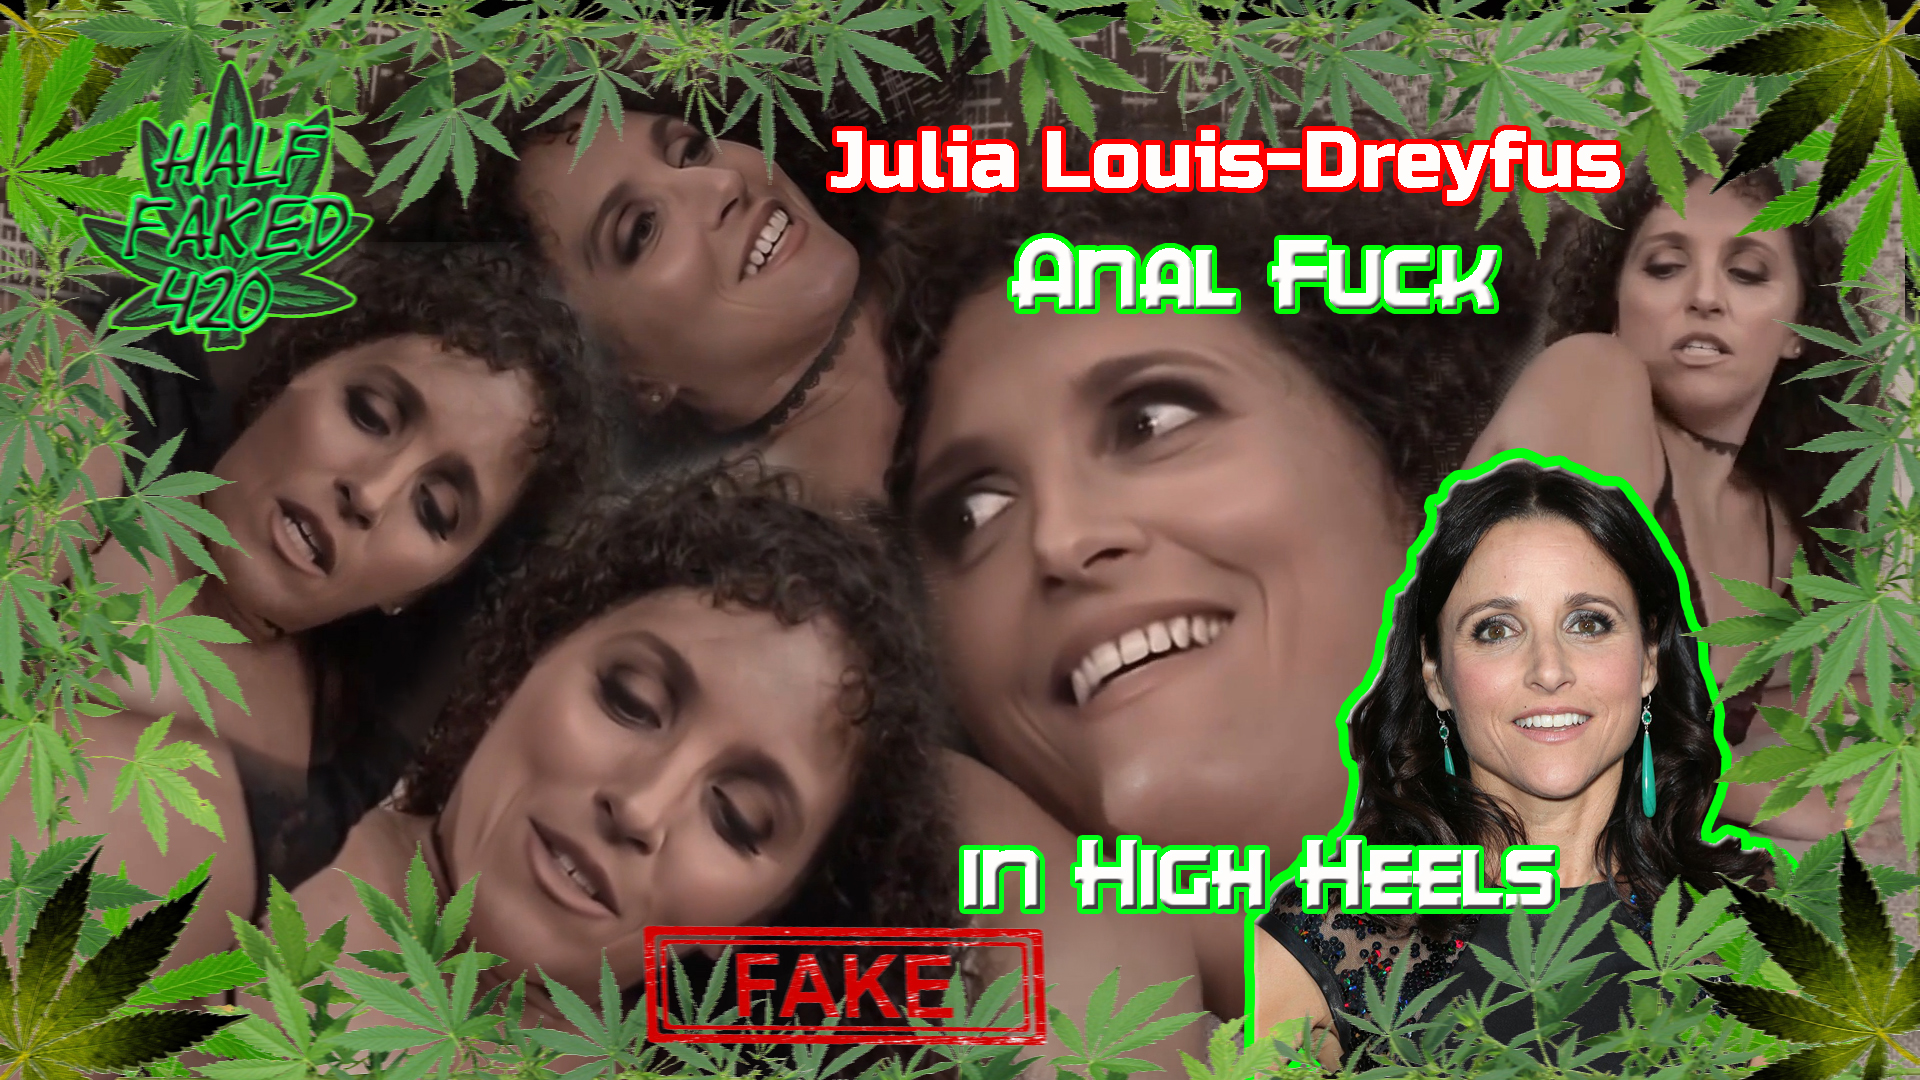 Julia Louis-Dreyfus - Anal fuck in high heels (Full Version) | PAID REQUEST | FAKE